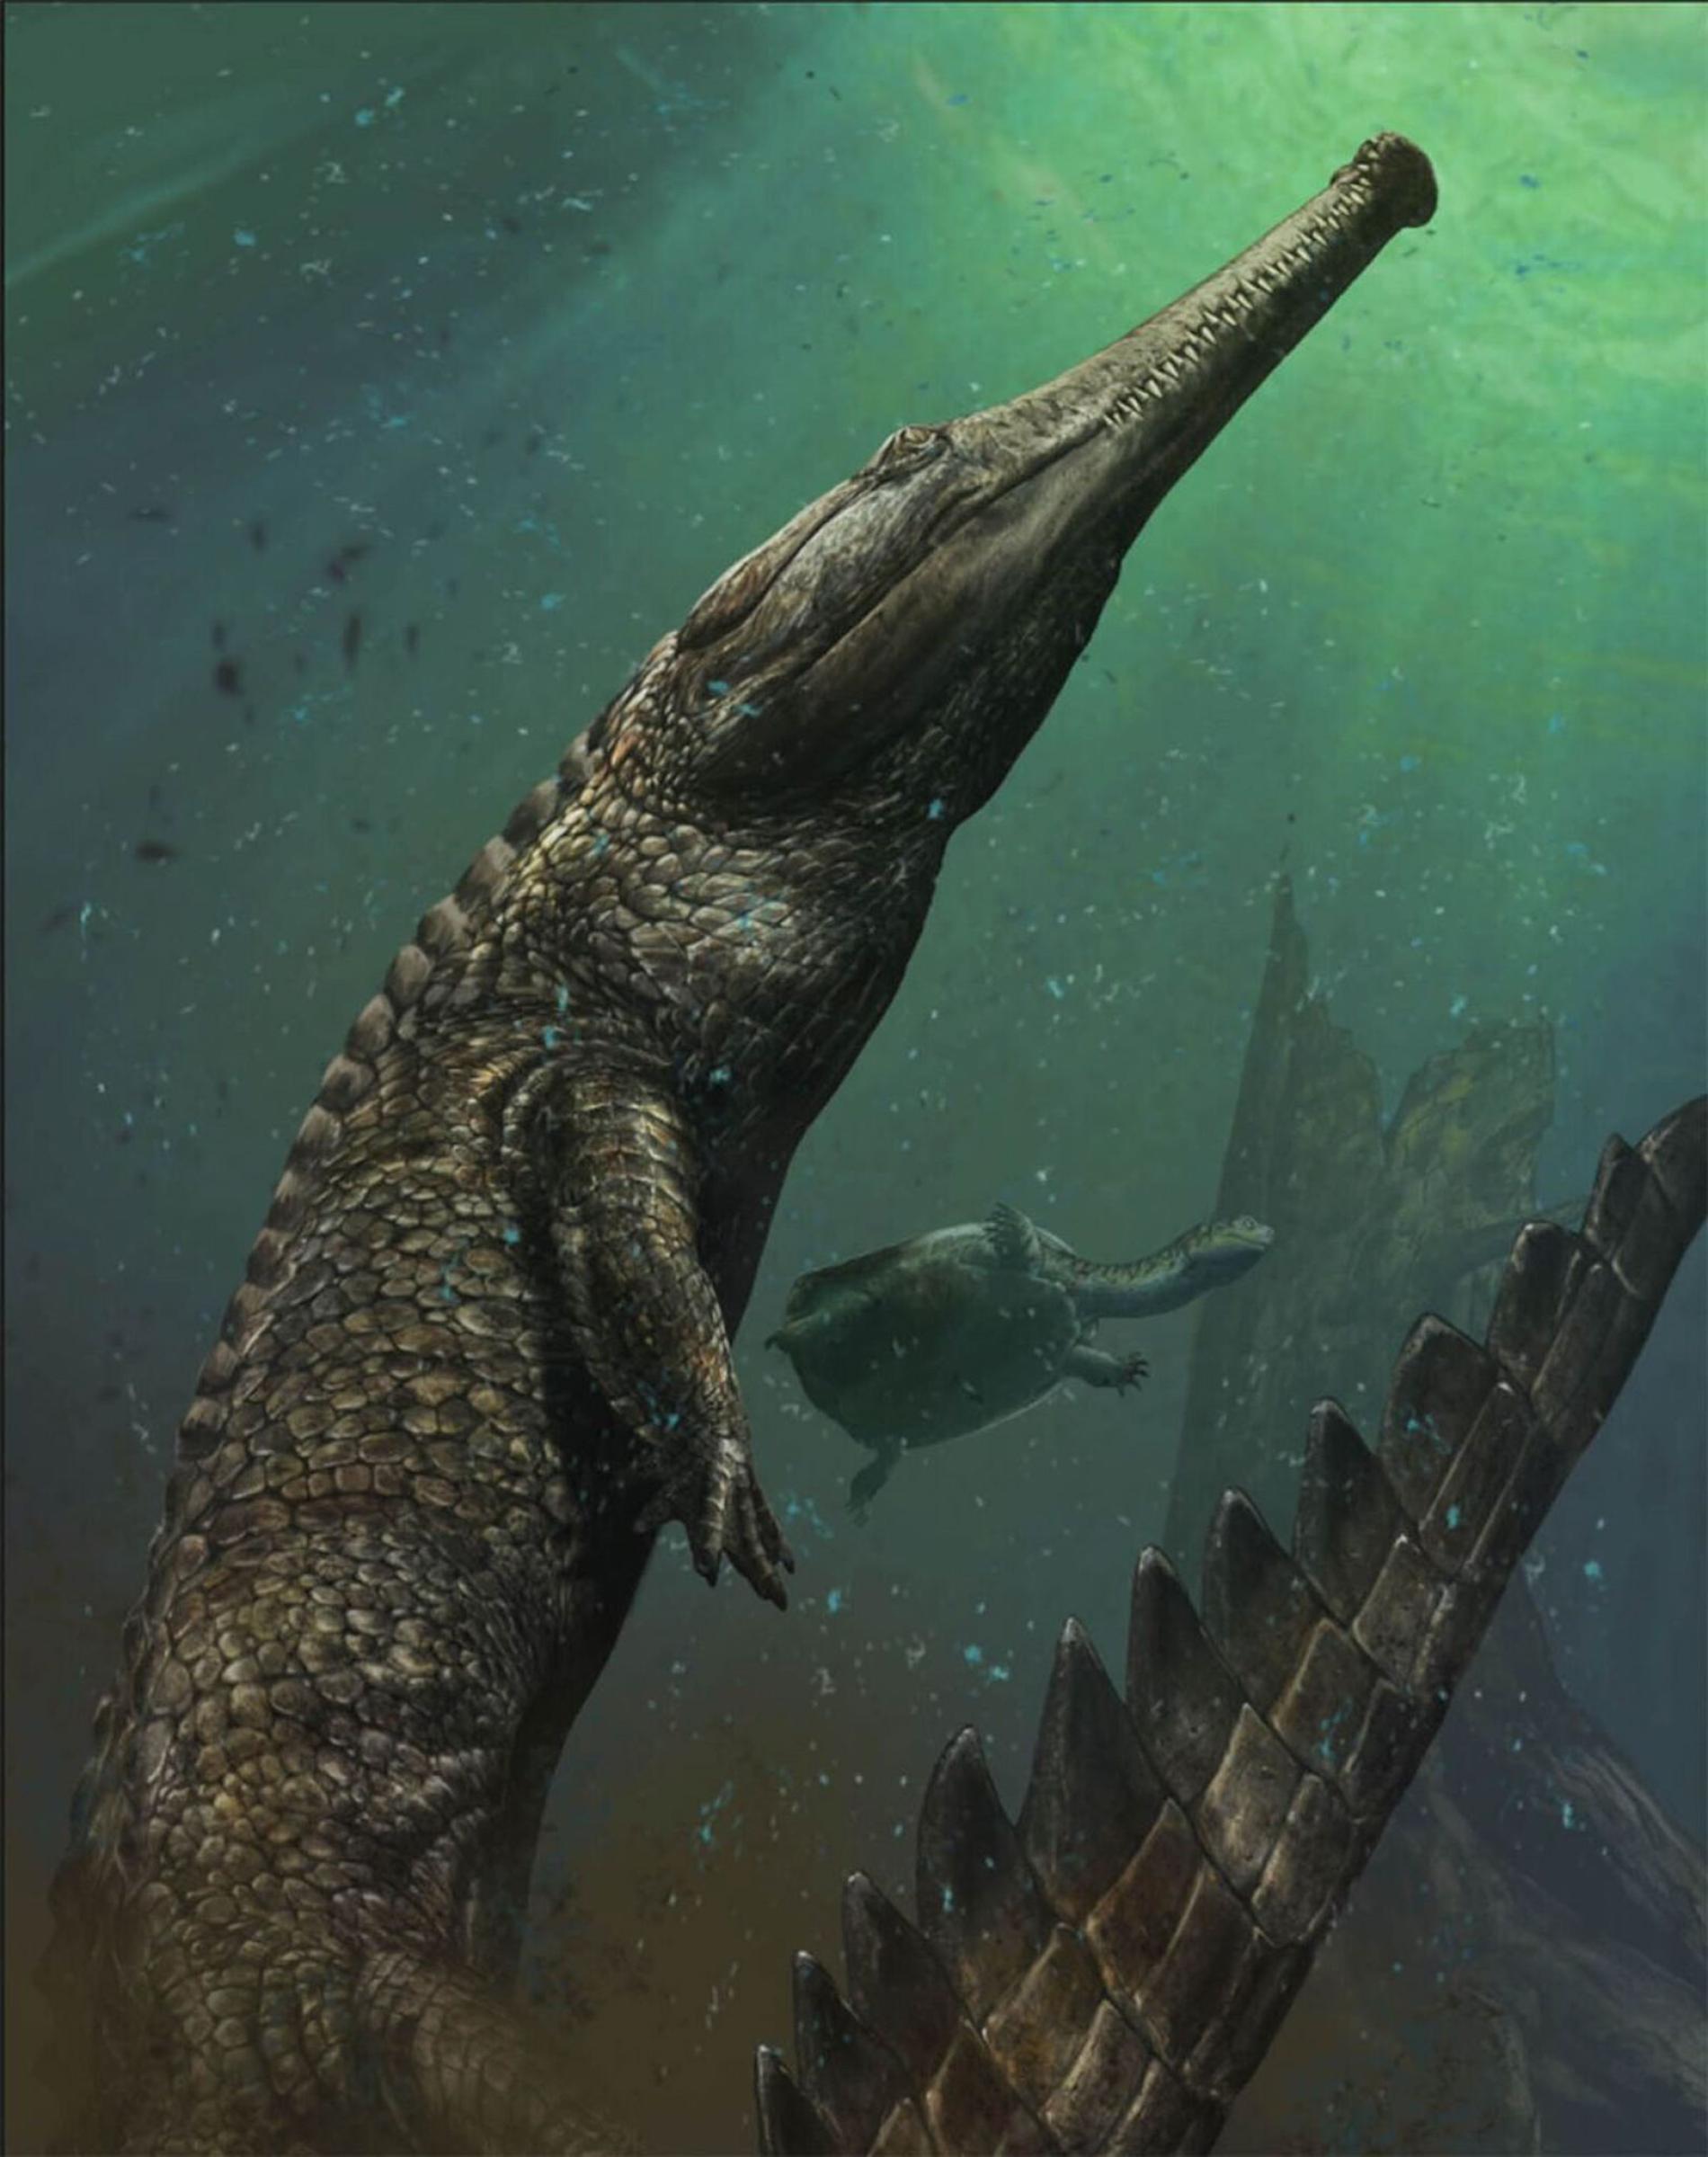 Monster-Size Marine Crocodile Discovered